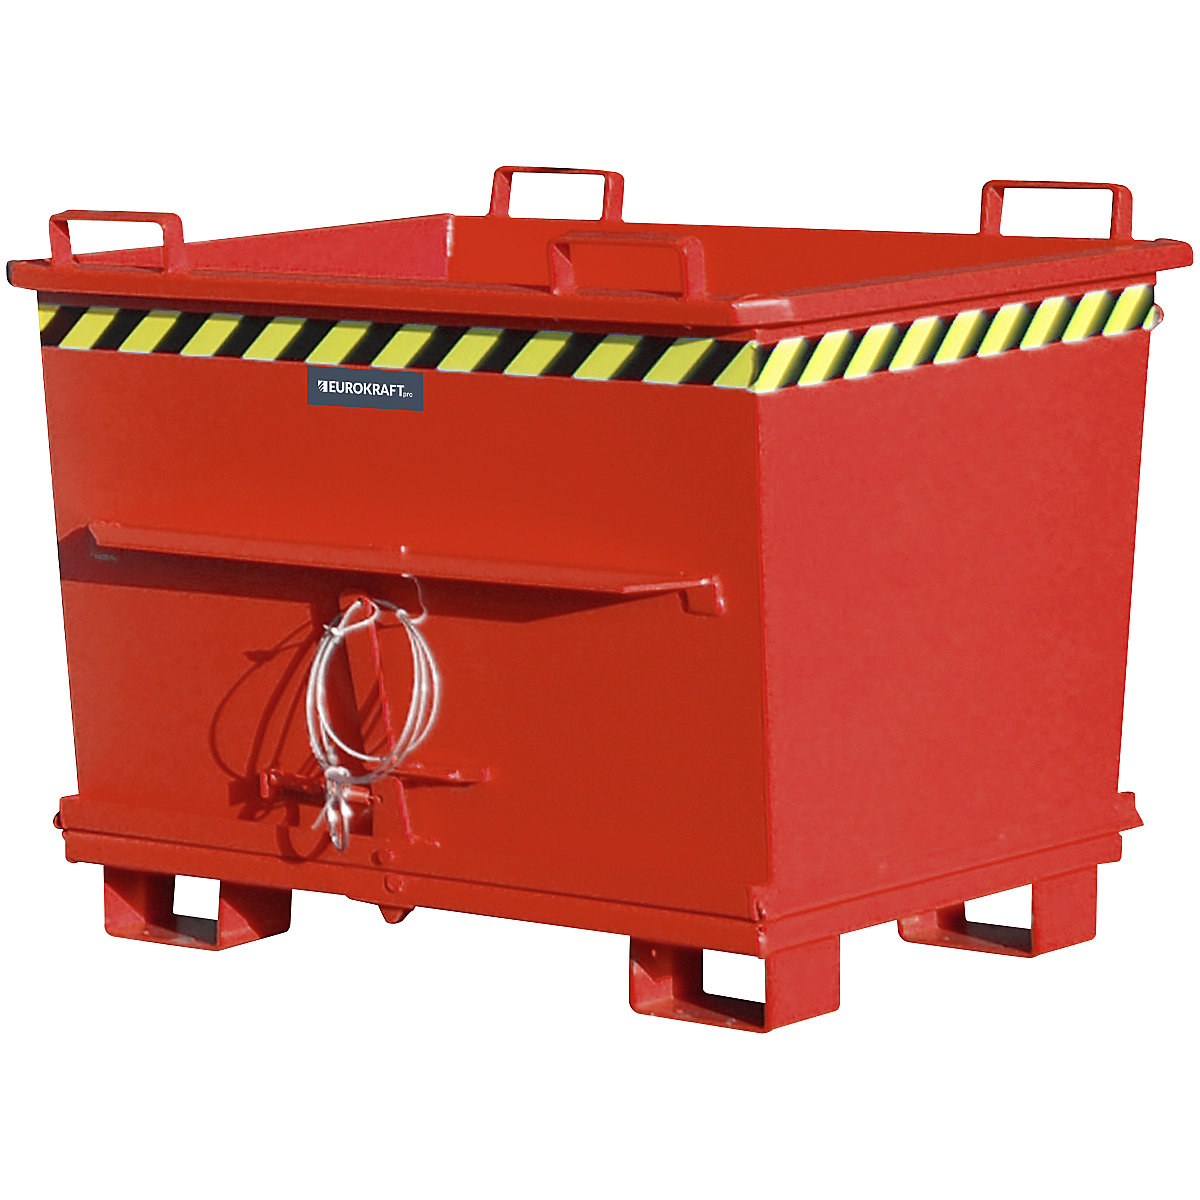 Conische bodemklepcontainer – eurokraft pro, inhoud 0,7 m³, draagvermogen 1500 kg, rood RAL 3000-15